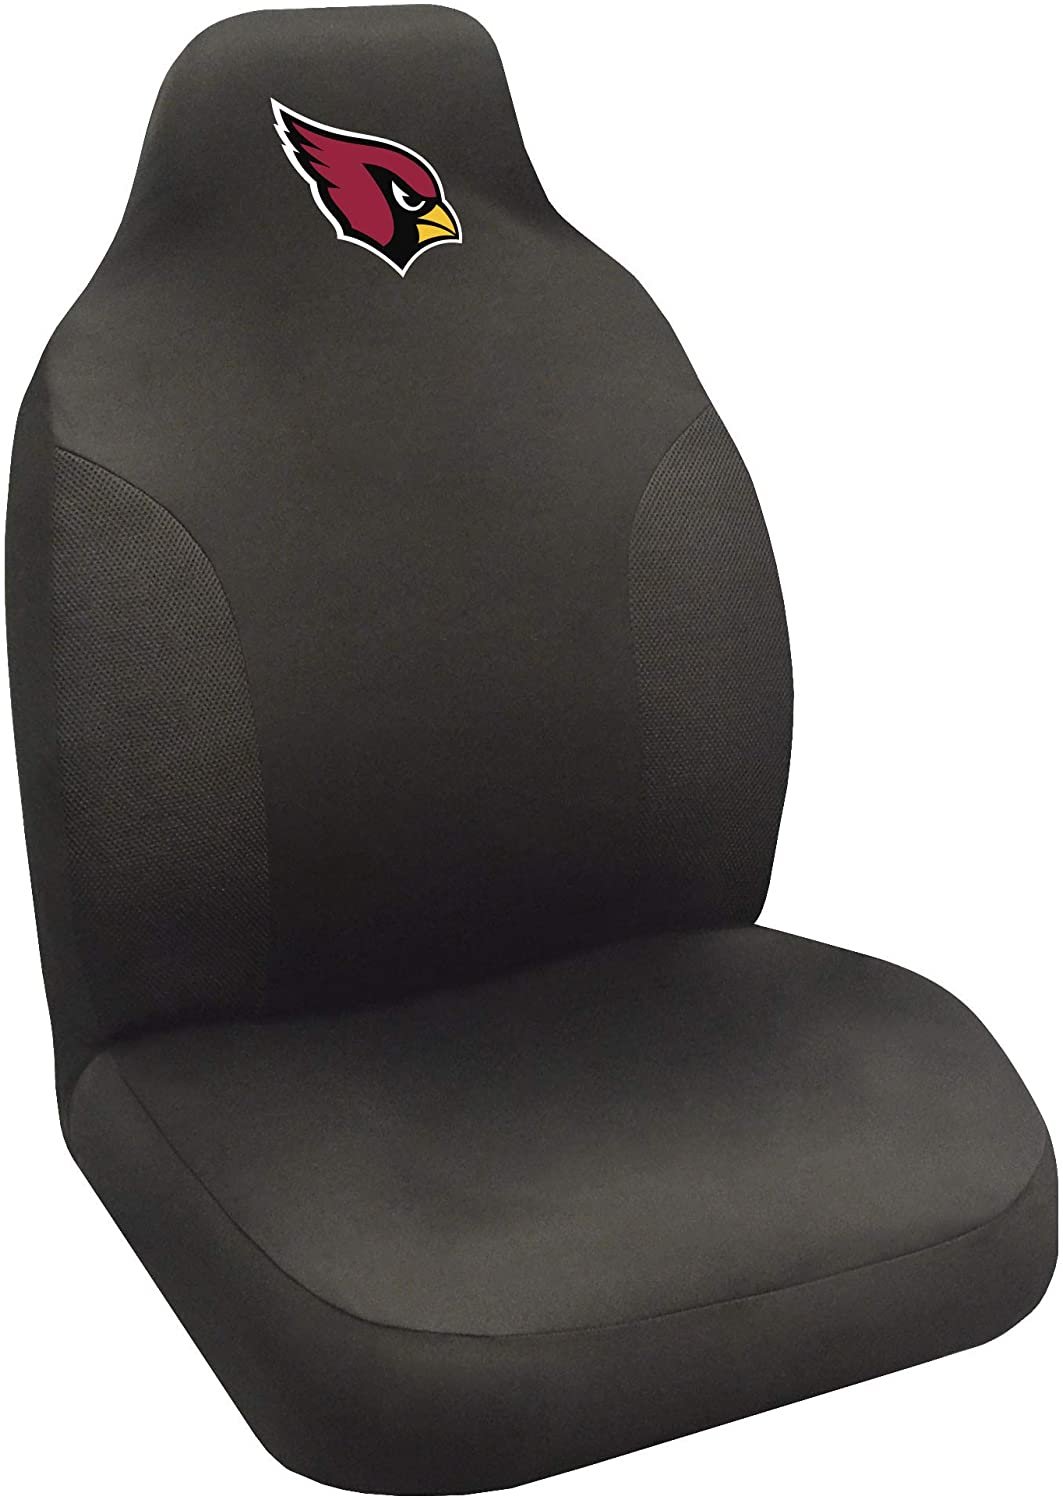 Arizona Cardinals Bucket Auto Seat Cover 48x20 Inch Elastic